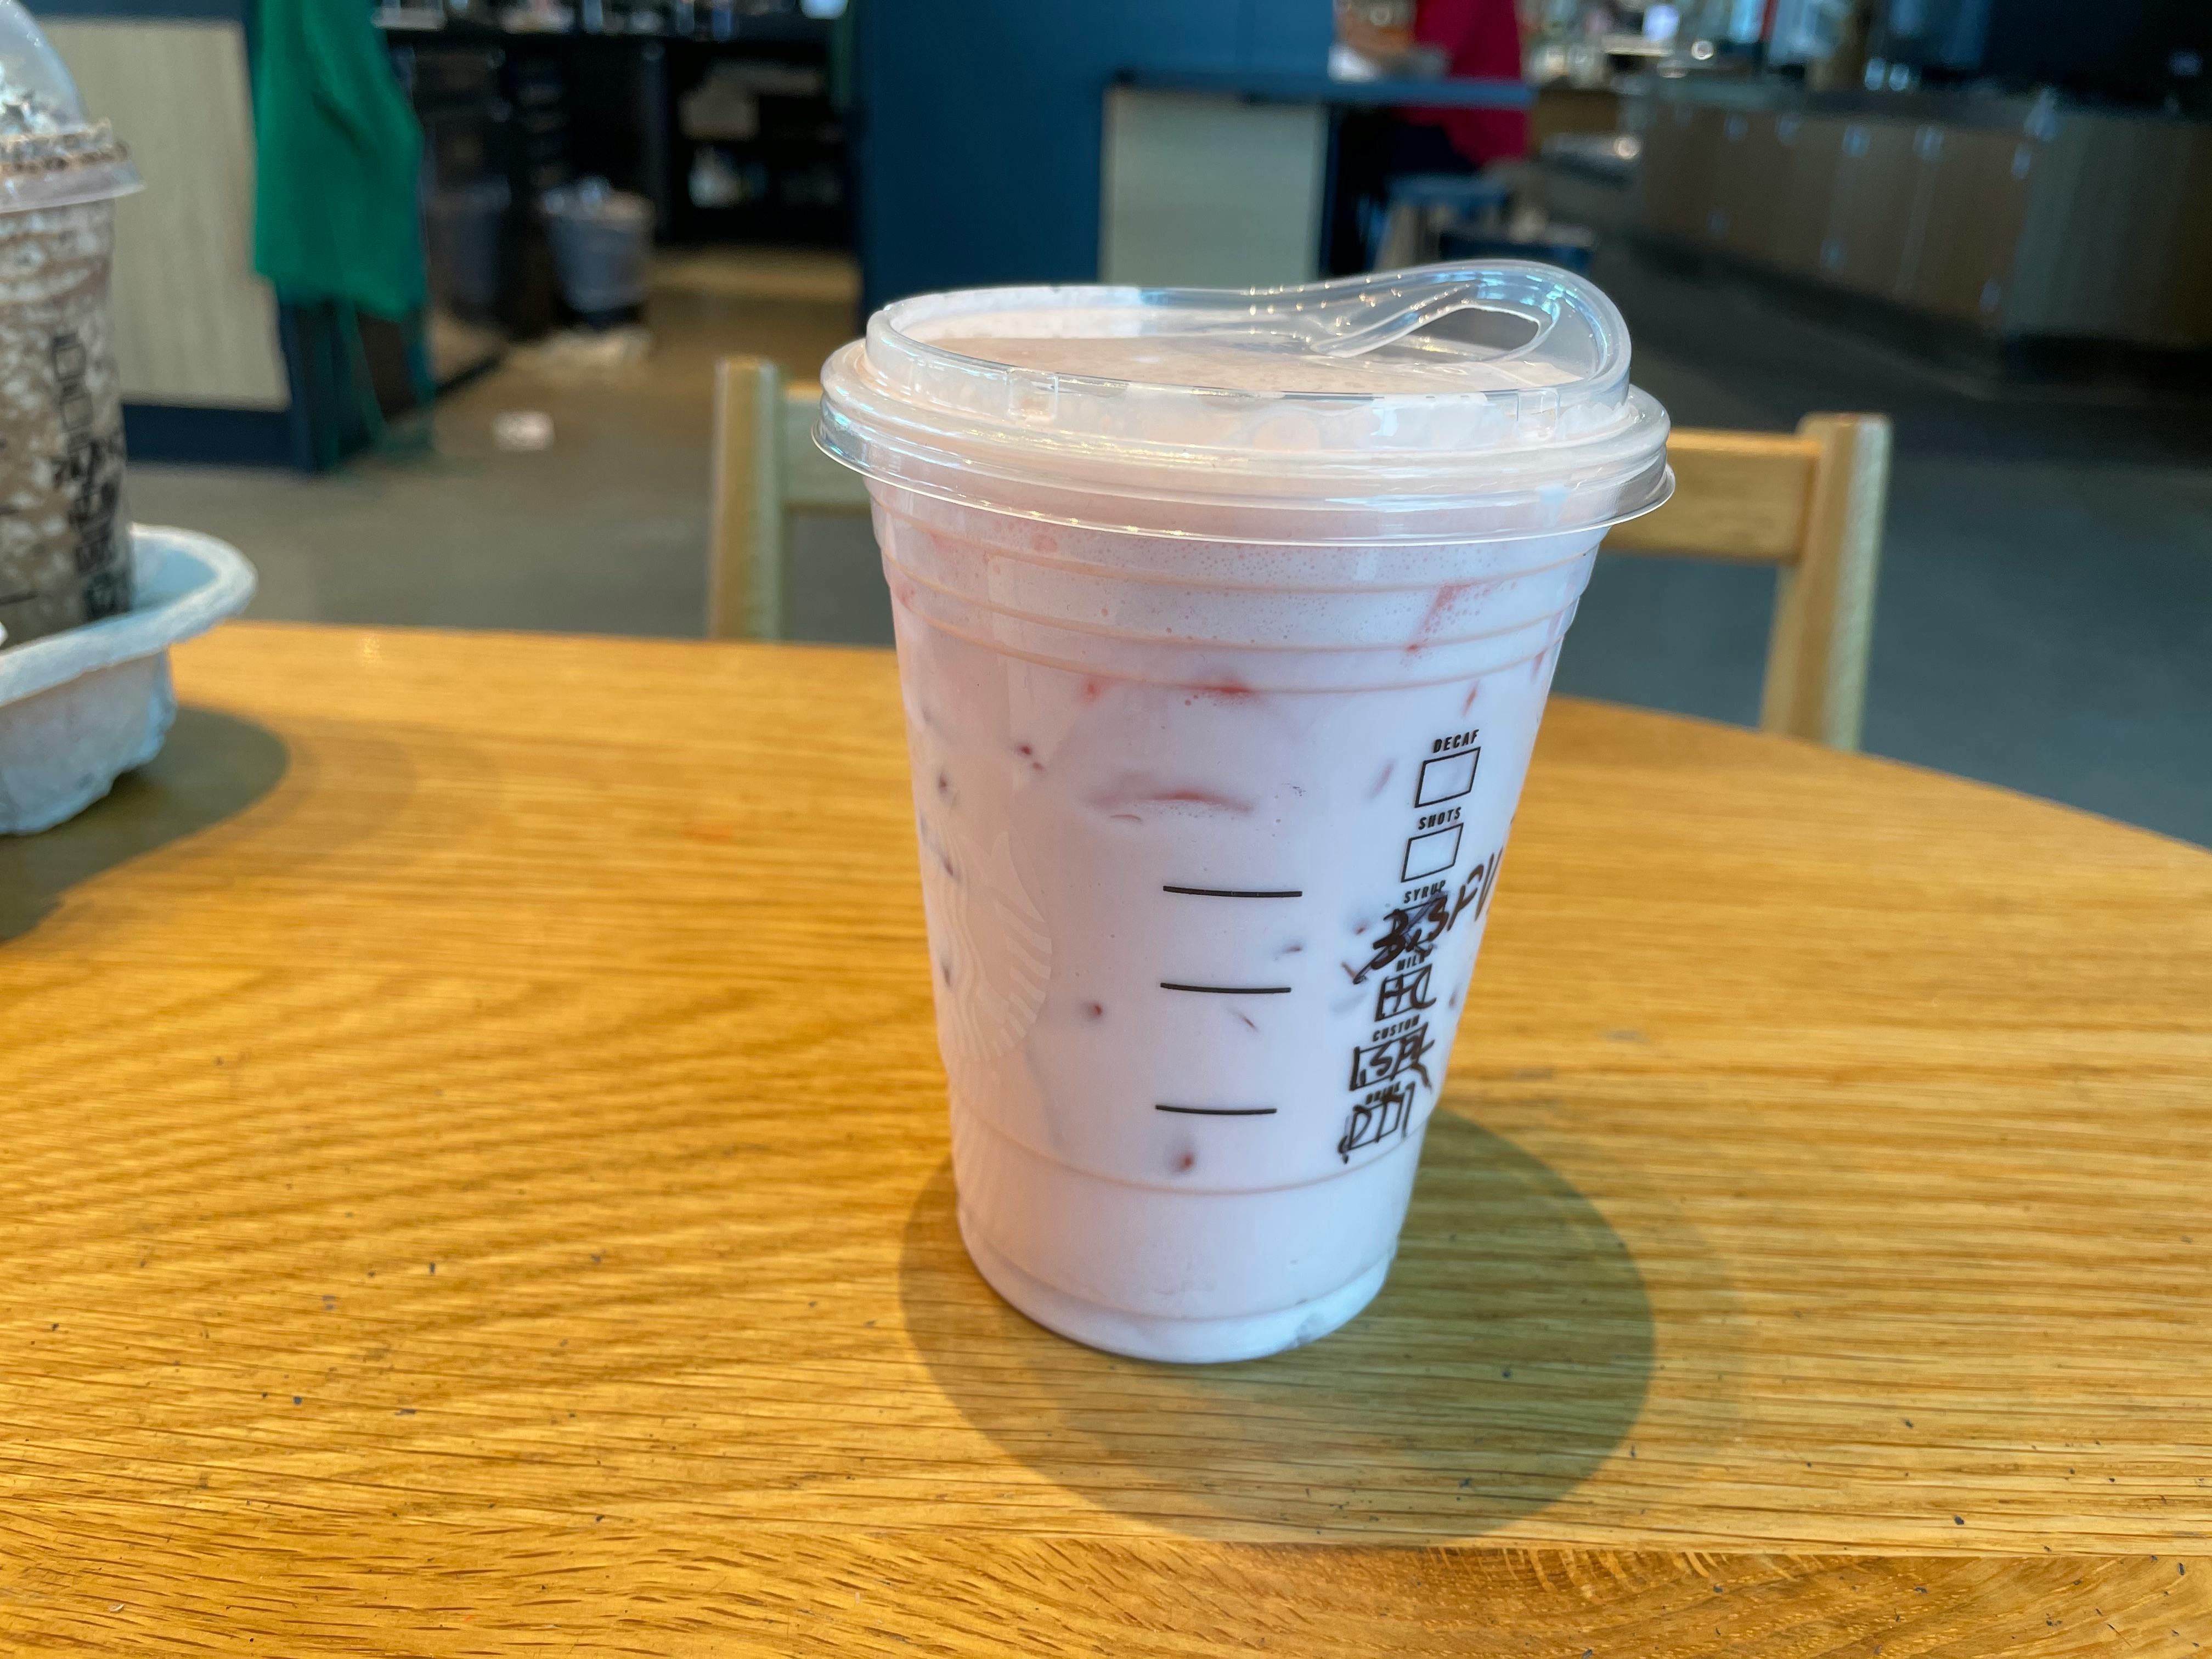 A Starbucks Grande Pink Drink sitting on a table inside Starbucks.